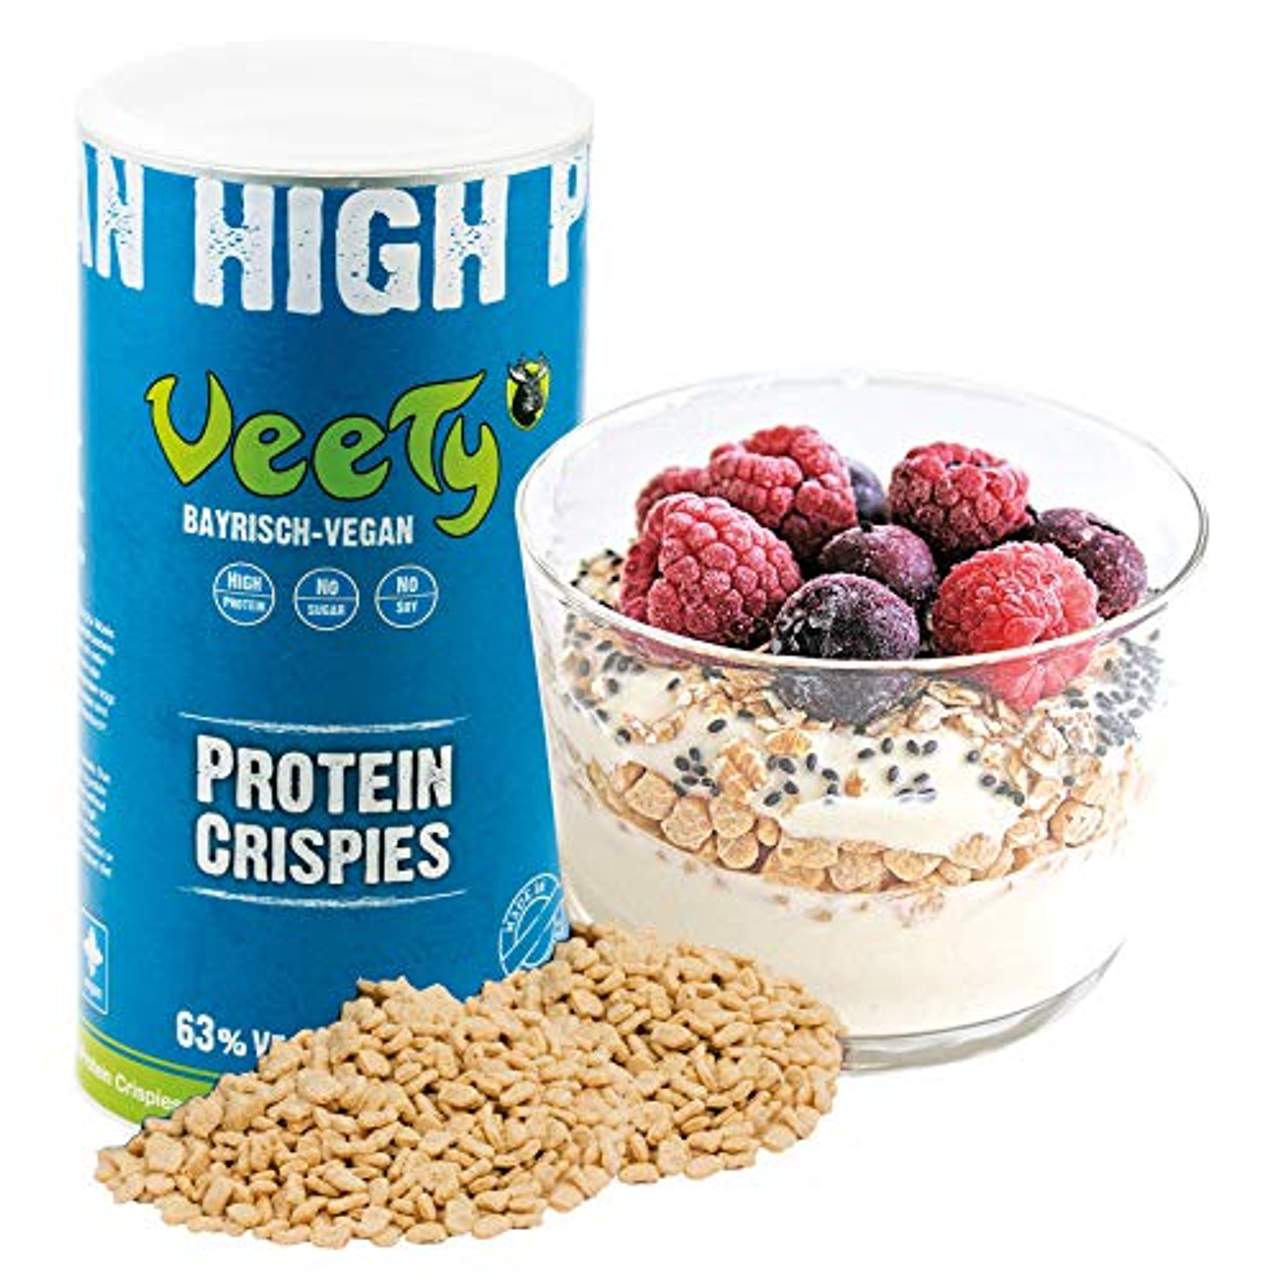 Veety Vegan Erbsen Protein Crispies -Neutral